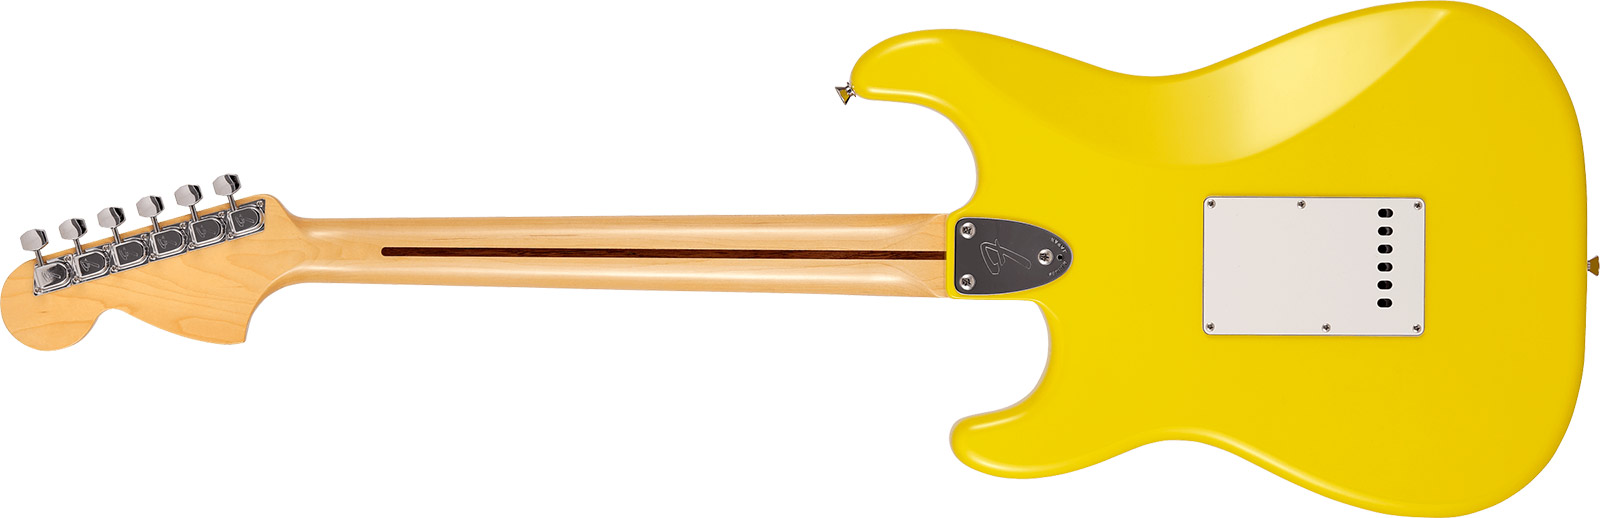 Fender Strat International Color Ltd Jap 3s Trem Mn - Monaco Yellow - Guitarra eléctrica con forma de str. - Variation 1